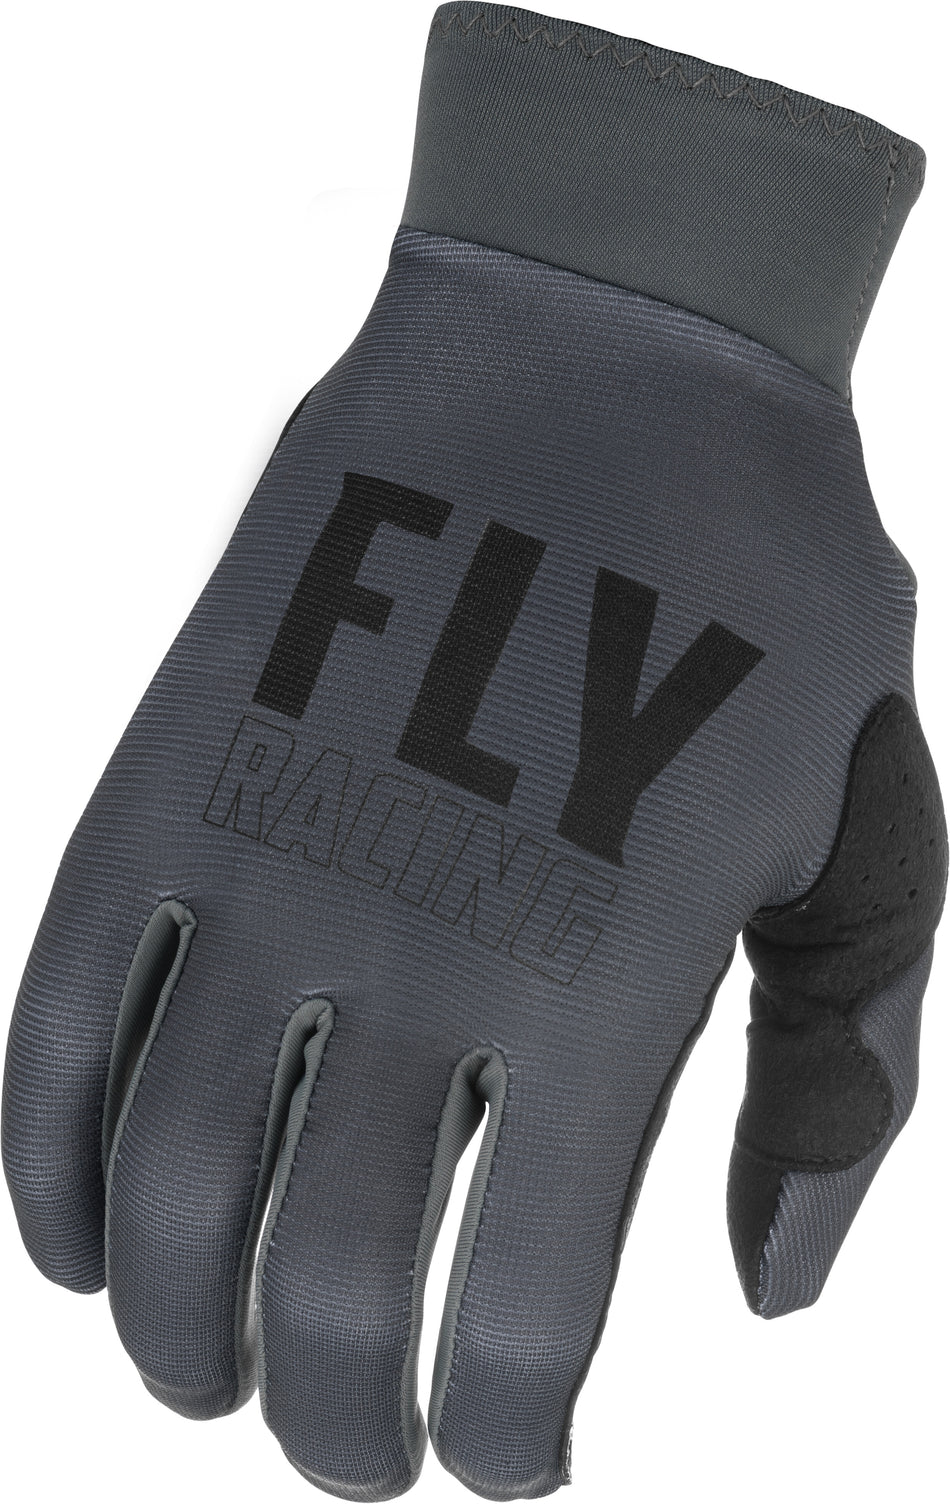 FLY RACING Pro Lite Gloves Grey/Black Sz 09 374-85609